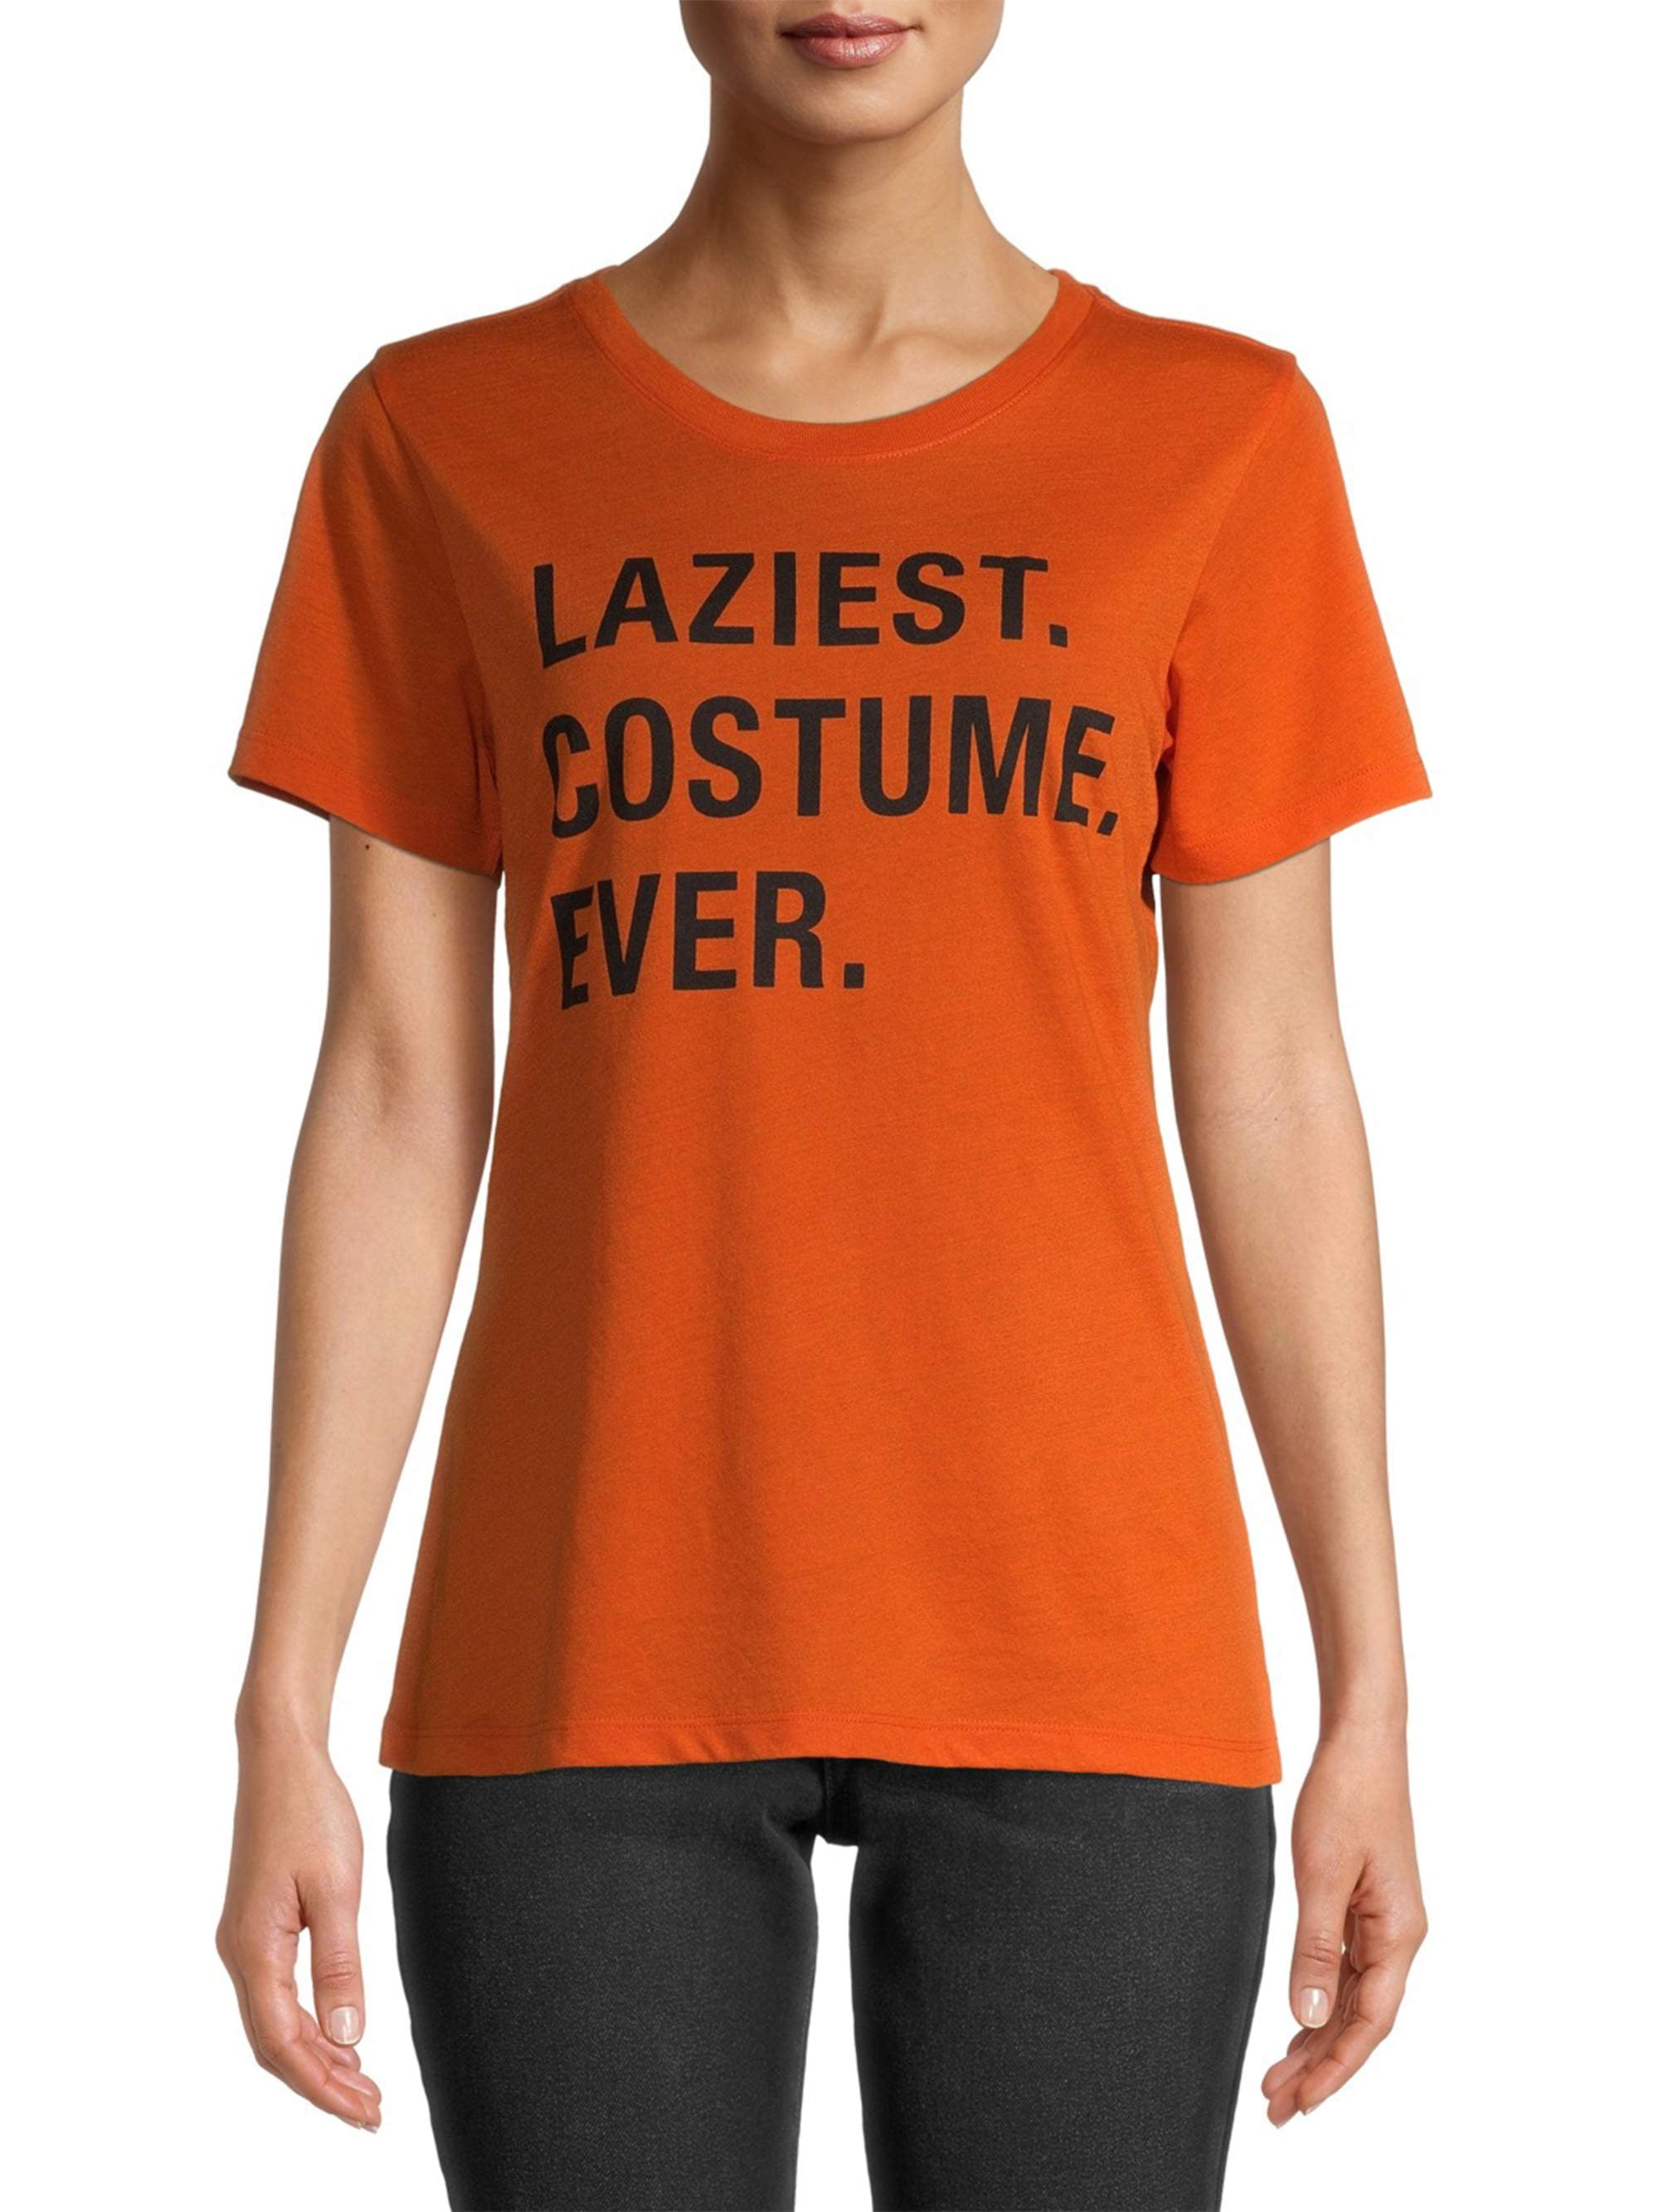 Lazy Lifestyles Socially Awkward Funny Lazy Women's V-Neck T-Shirt